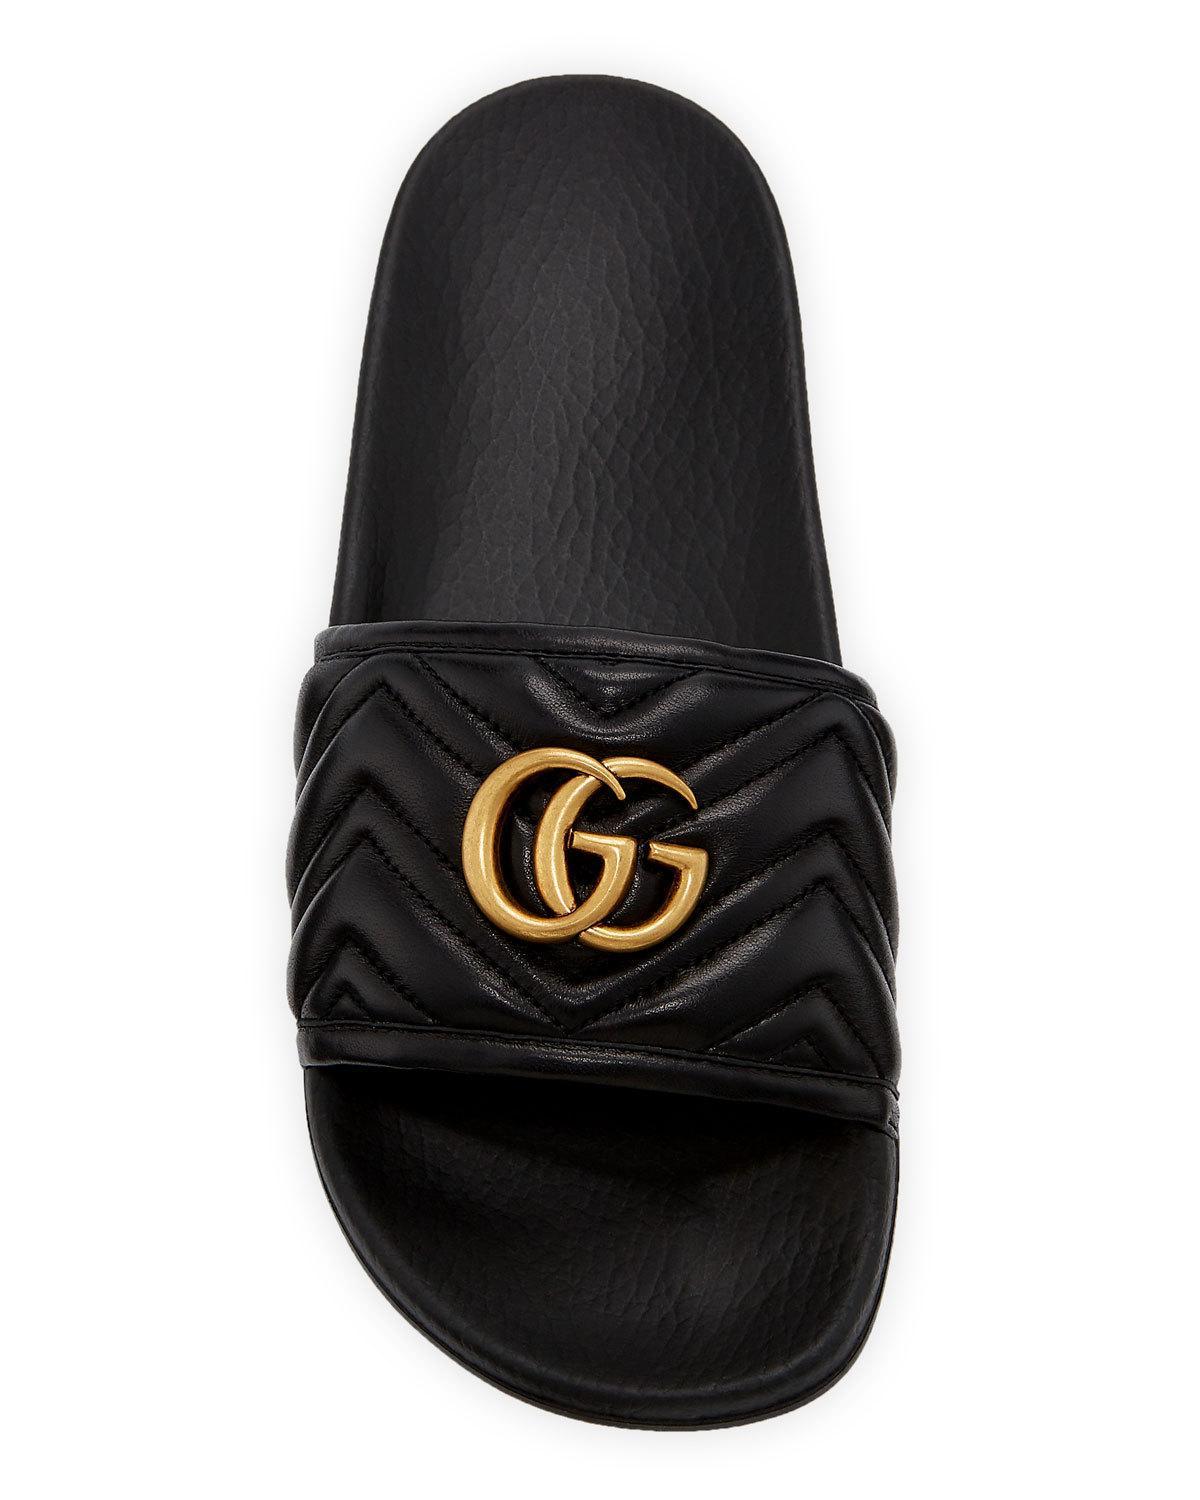 Gucci Pursuit Flat Leather Slide Sandals in Black - Lyst